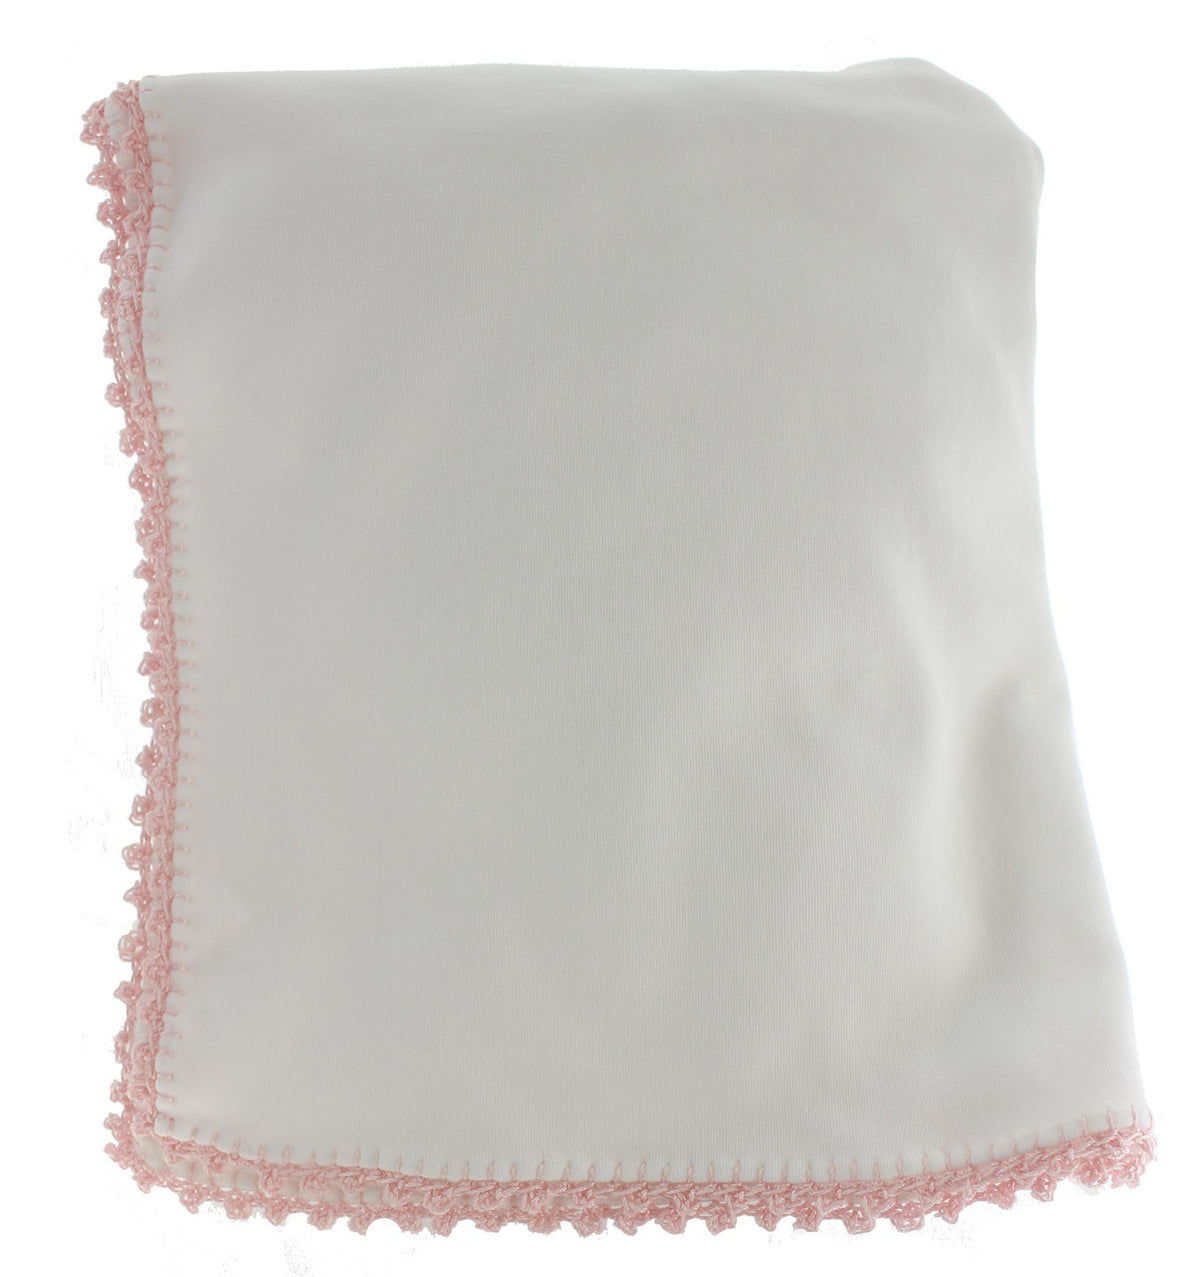 Pixie Lily Girls Receiving Blanket White Pink Crochet Trim